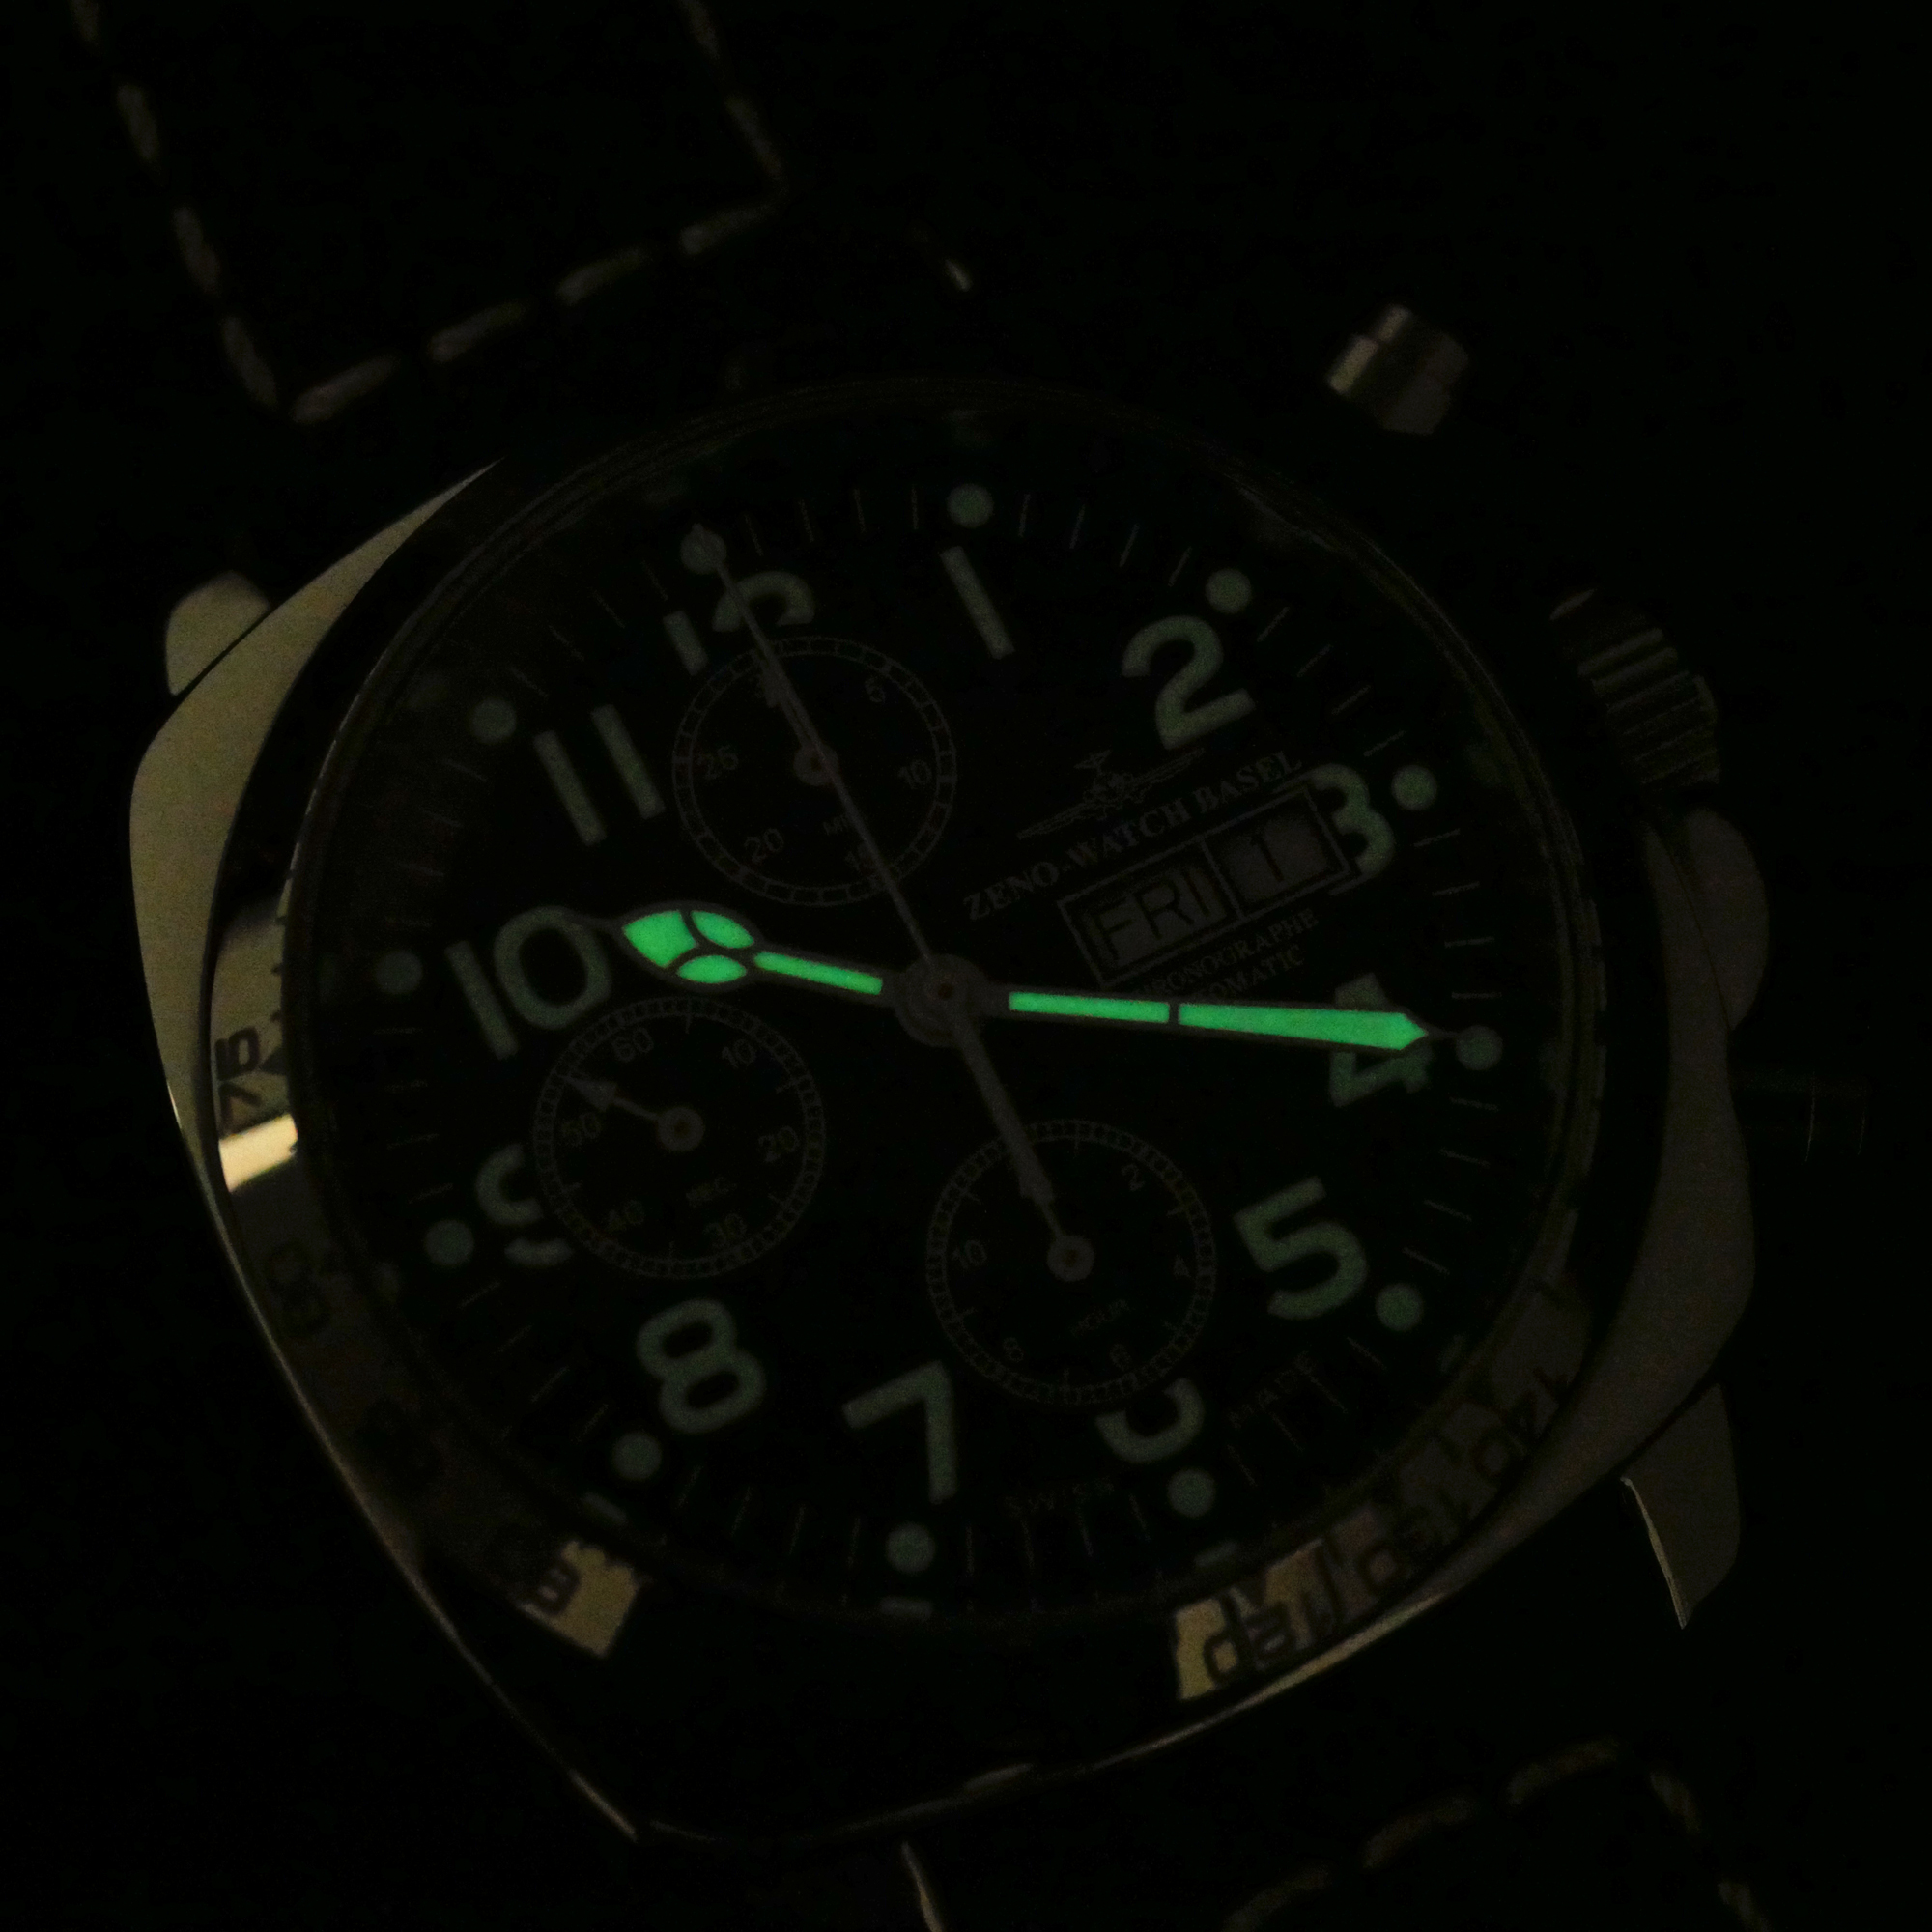 Zeno-Watch Basel Square Pilot Chrono Day-Date Swiss Men's Watch 43mm 3ATM 3557TVDD-a1